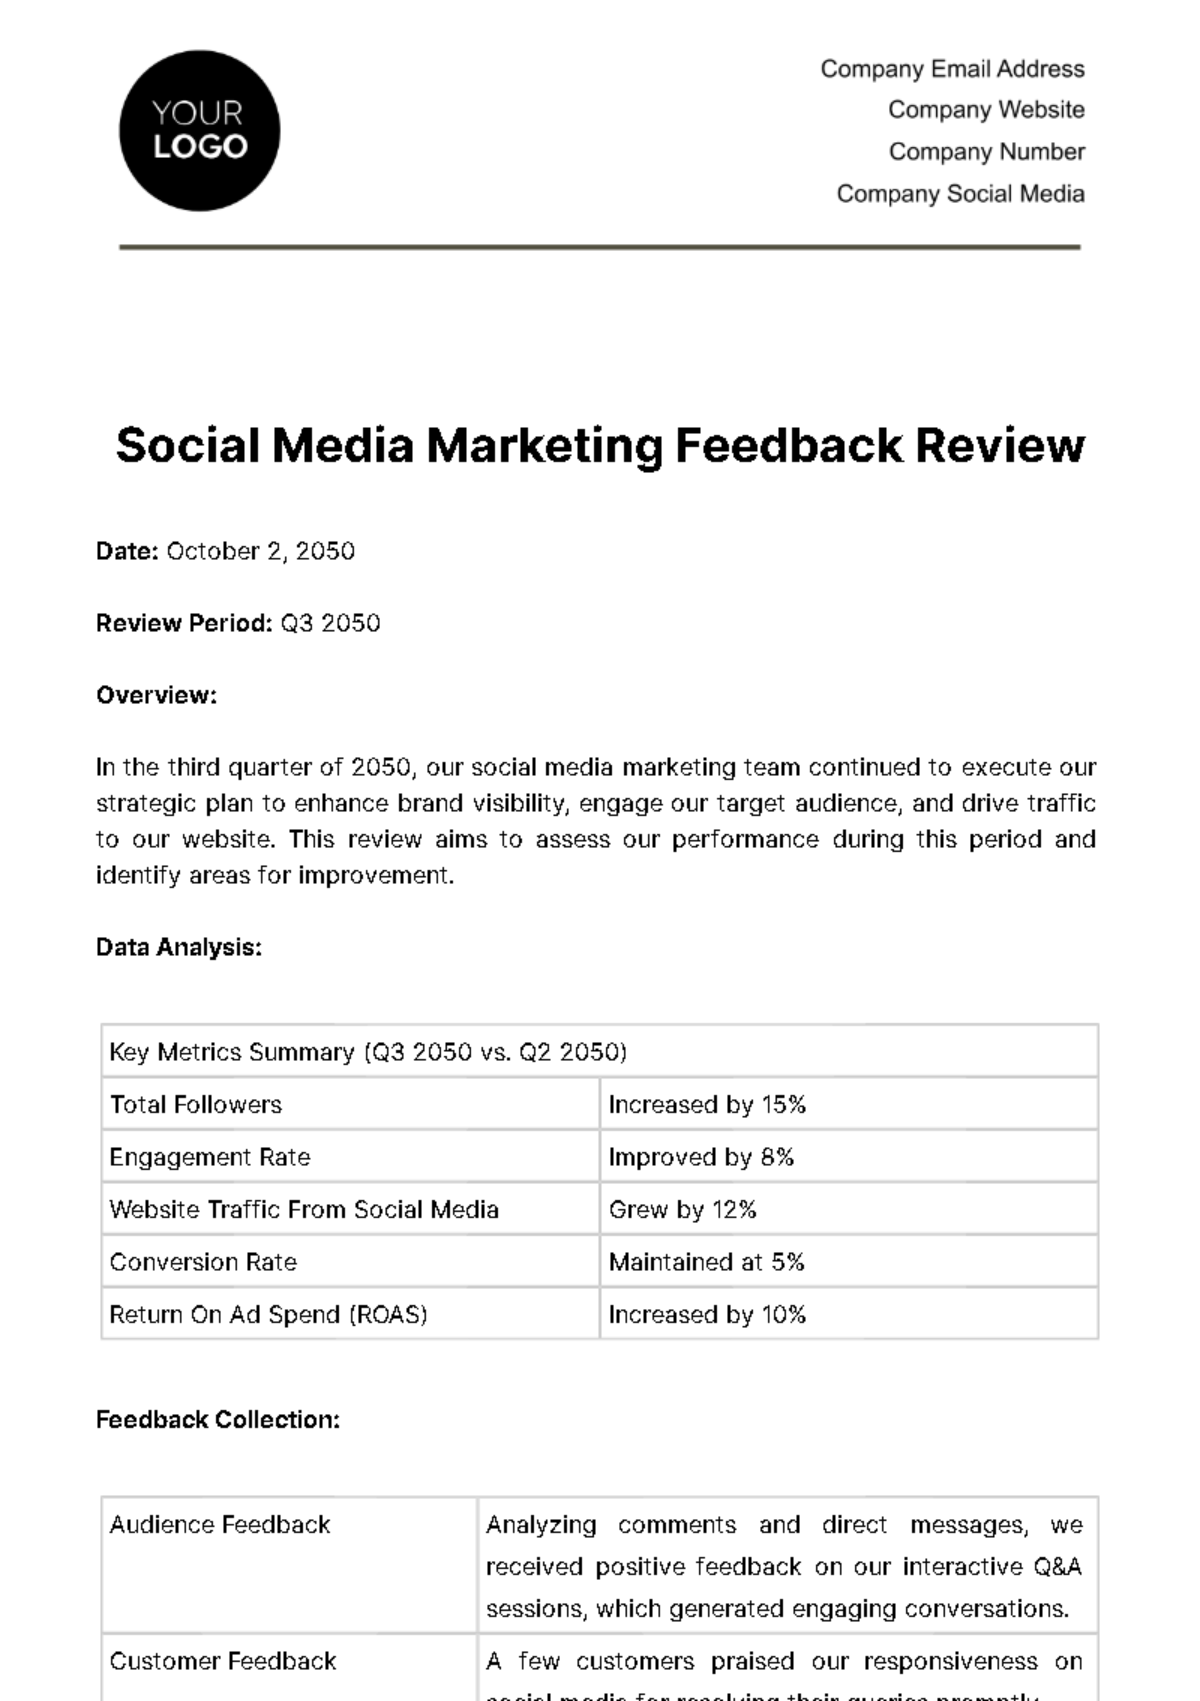 Free Social Media Marketing Feedback Review Template